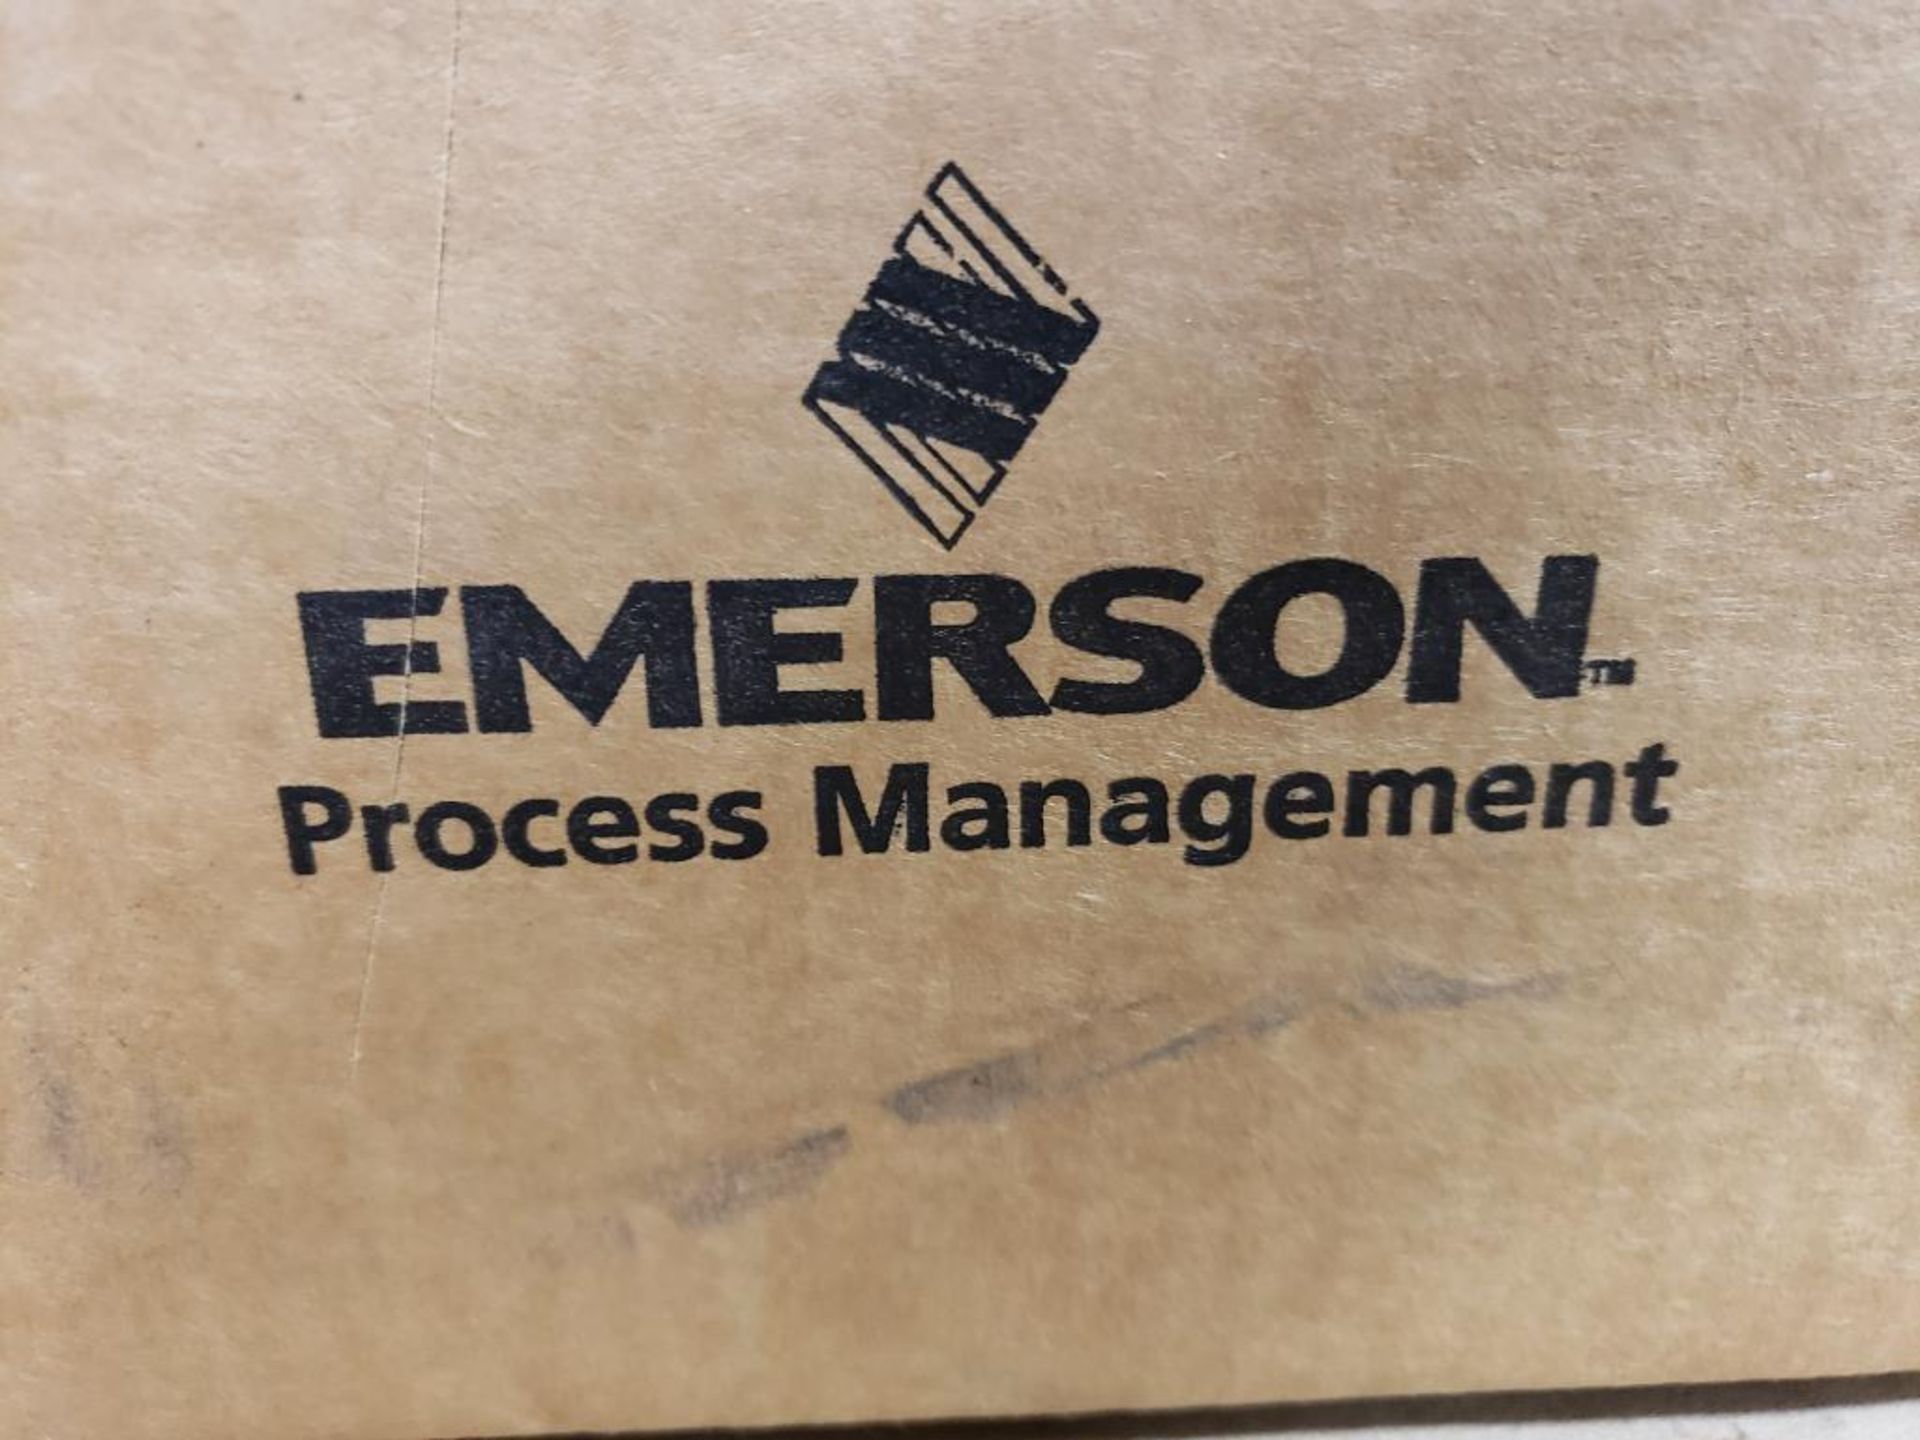 Emerson Bristol chart reader. 410887B02. New in box. - Image 2 of 4